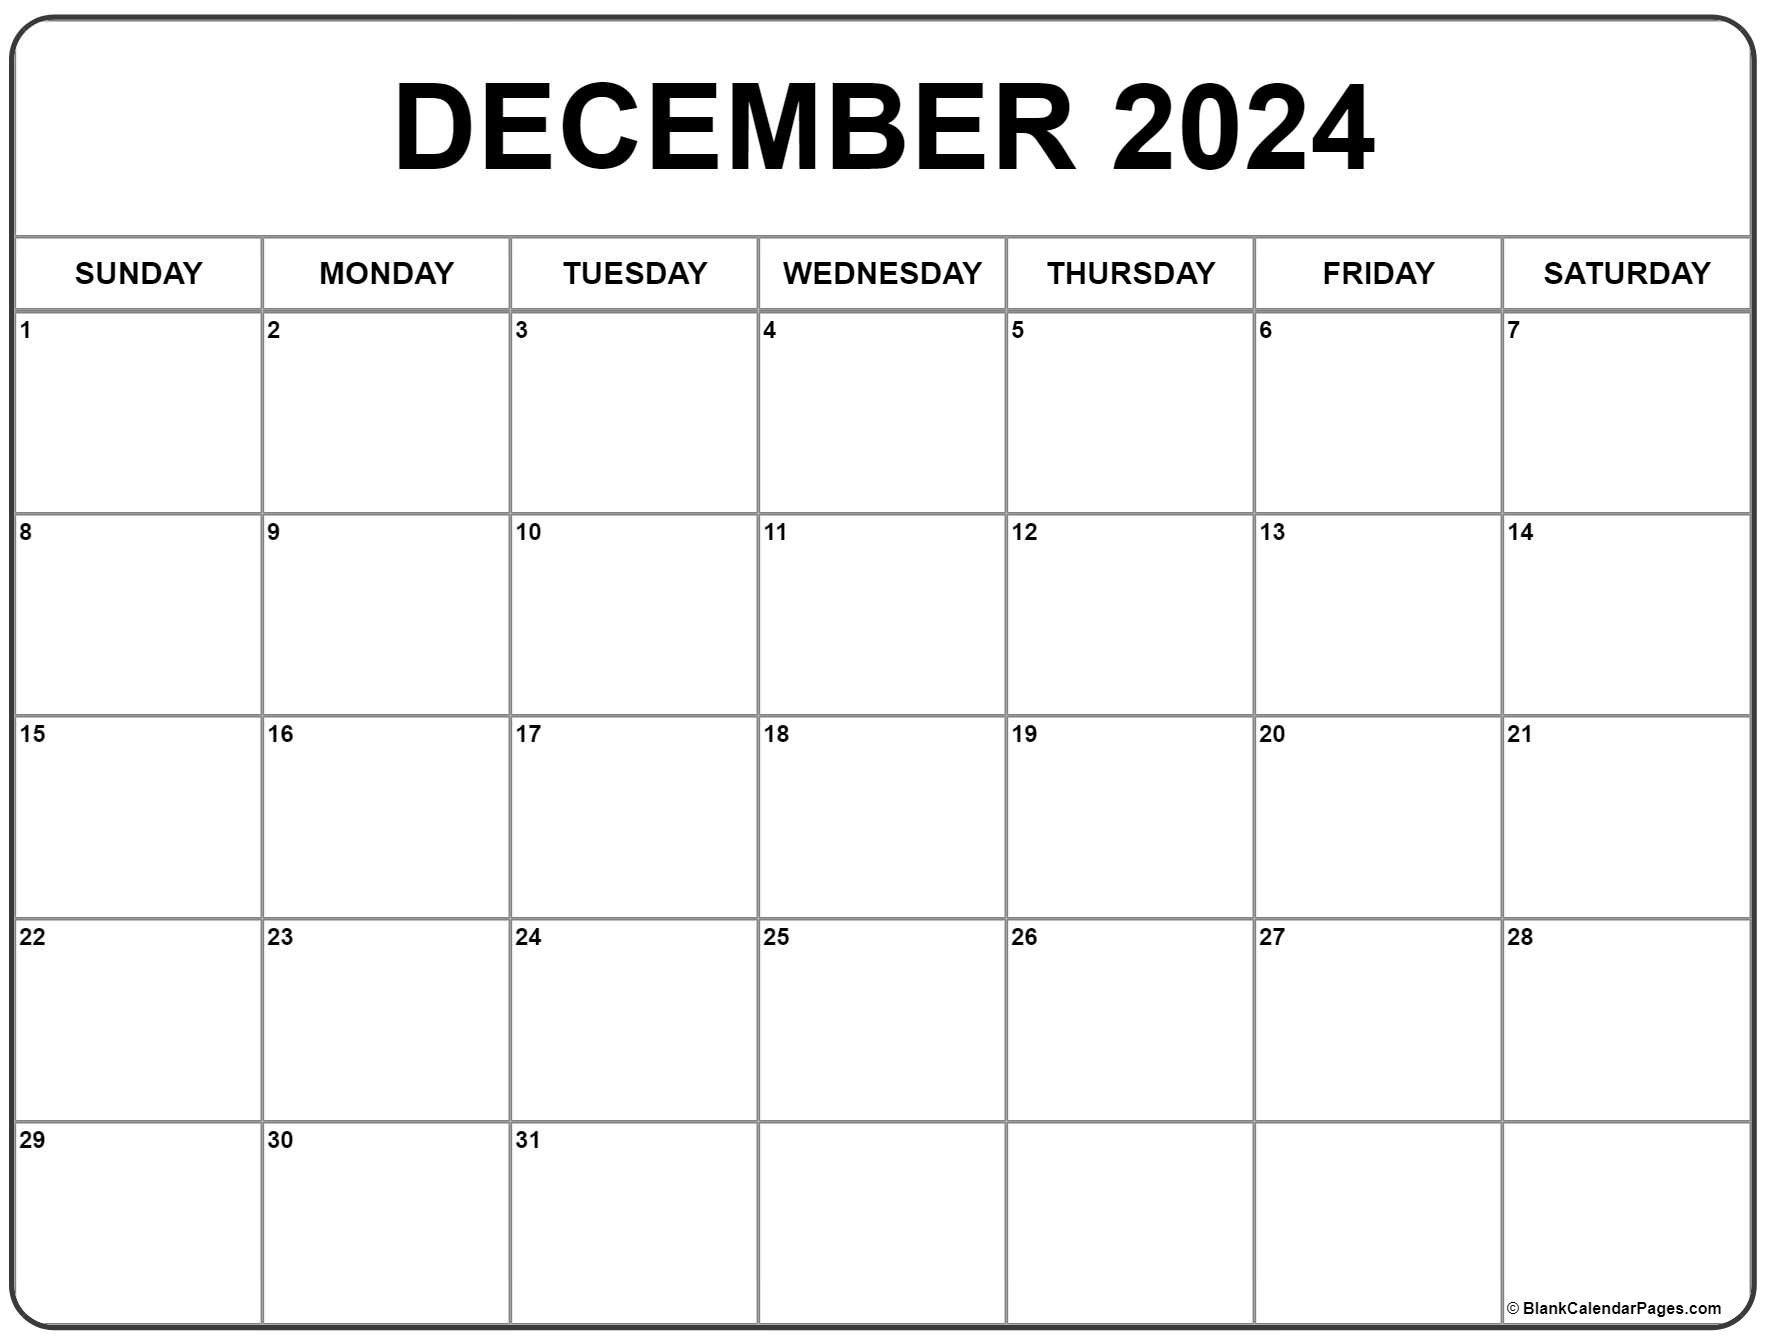 December 2024 Calendar | Free Printable Calendar for December 2024 Calendar Printable Free